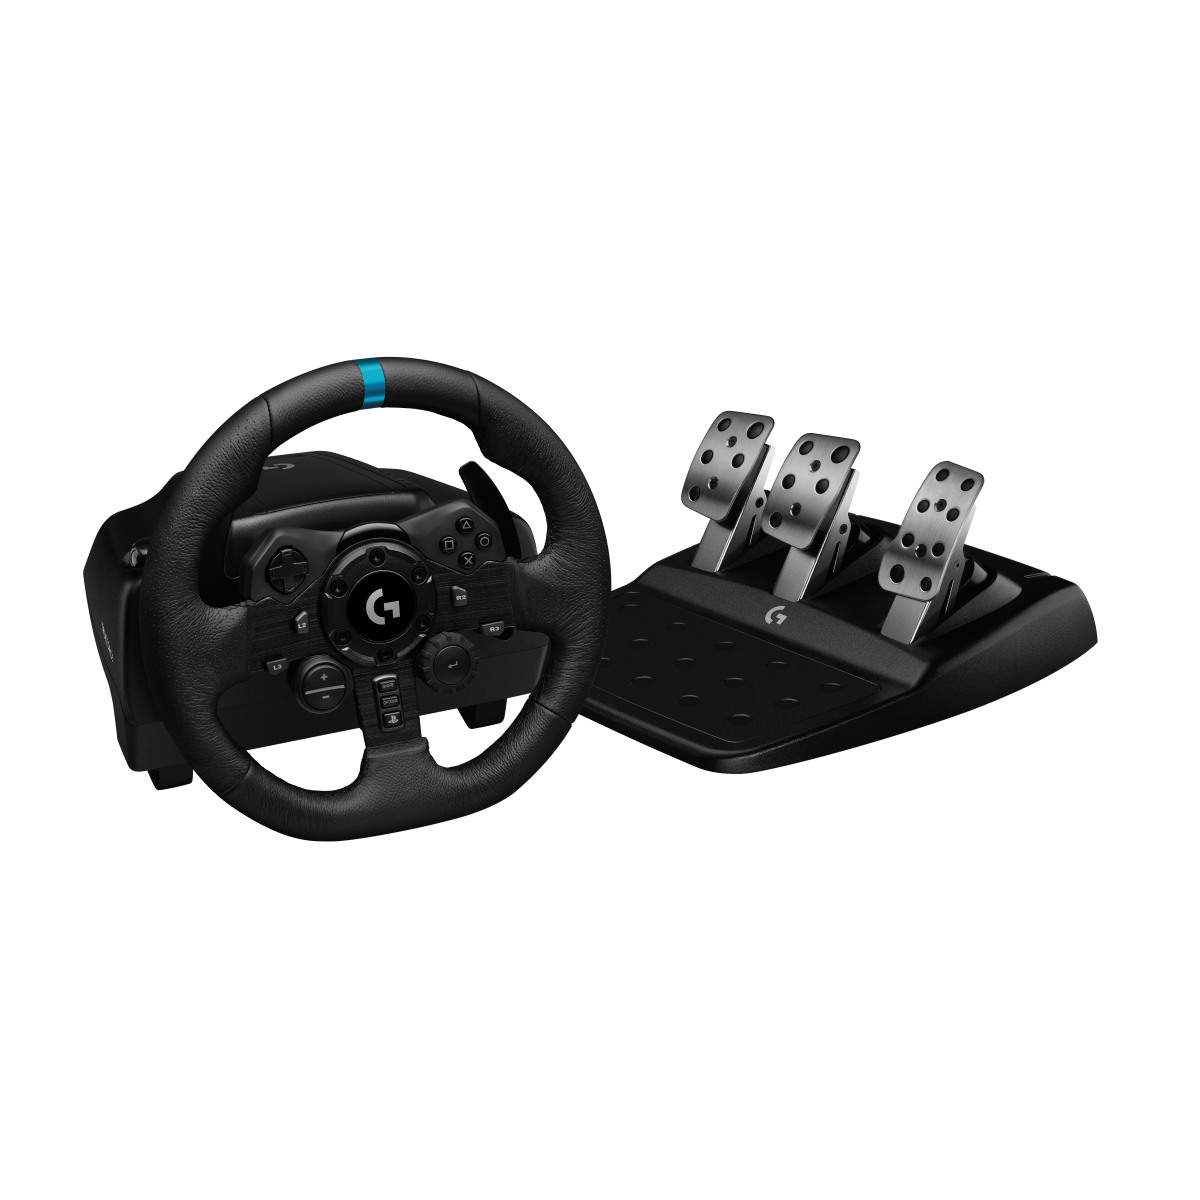 LOGITECH G923 TRUEFORCE SIM Racing Wheel